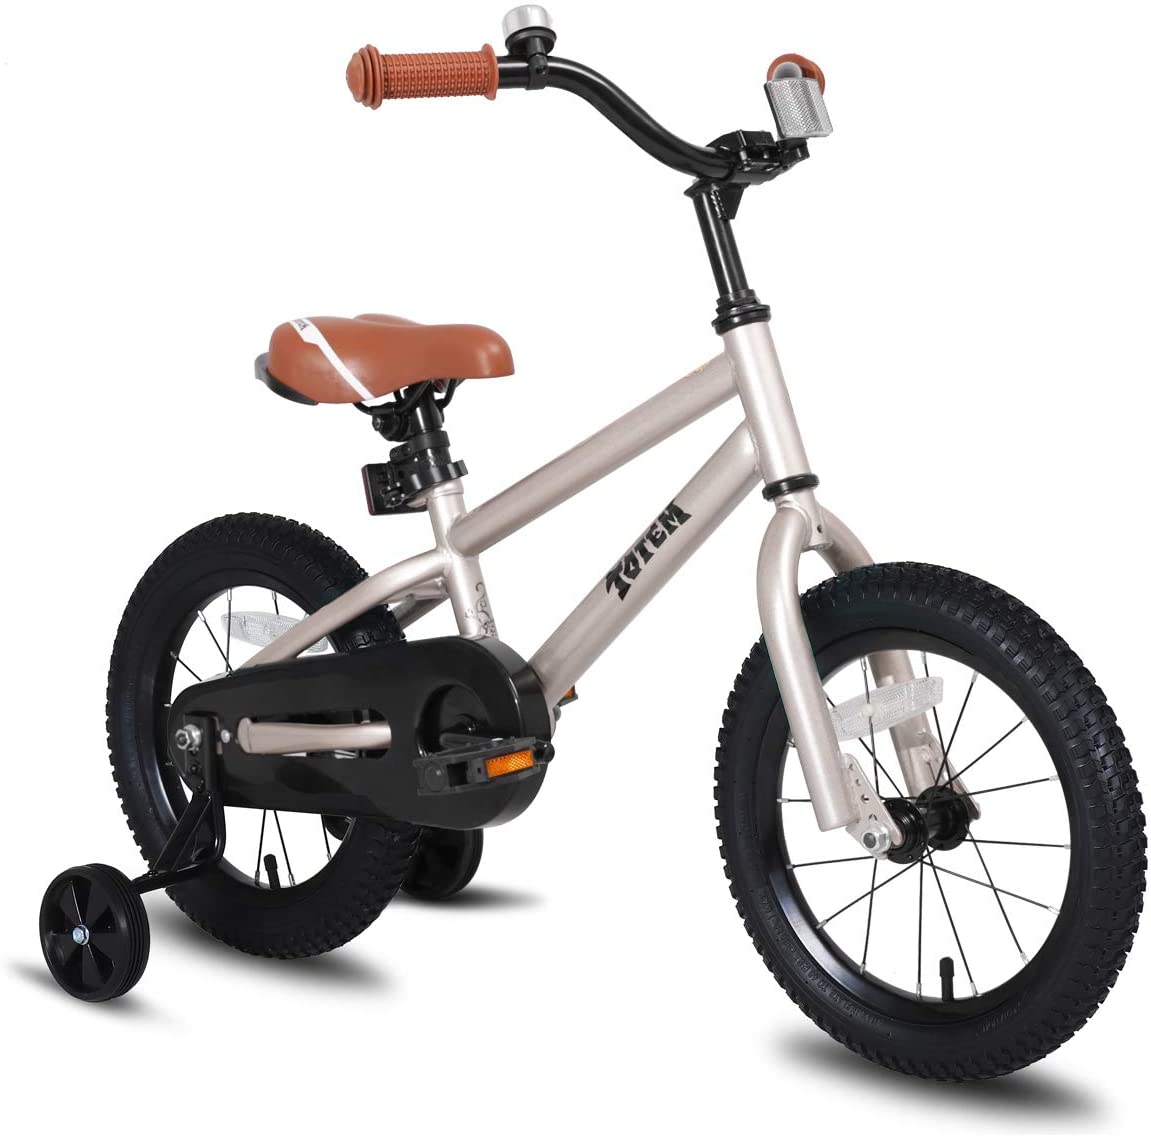 JOYSTAR Totem Kids Bike with Training Wheels 16 inch Silver $69.99